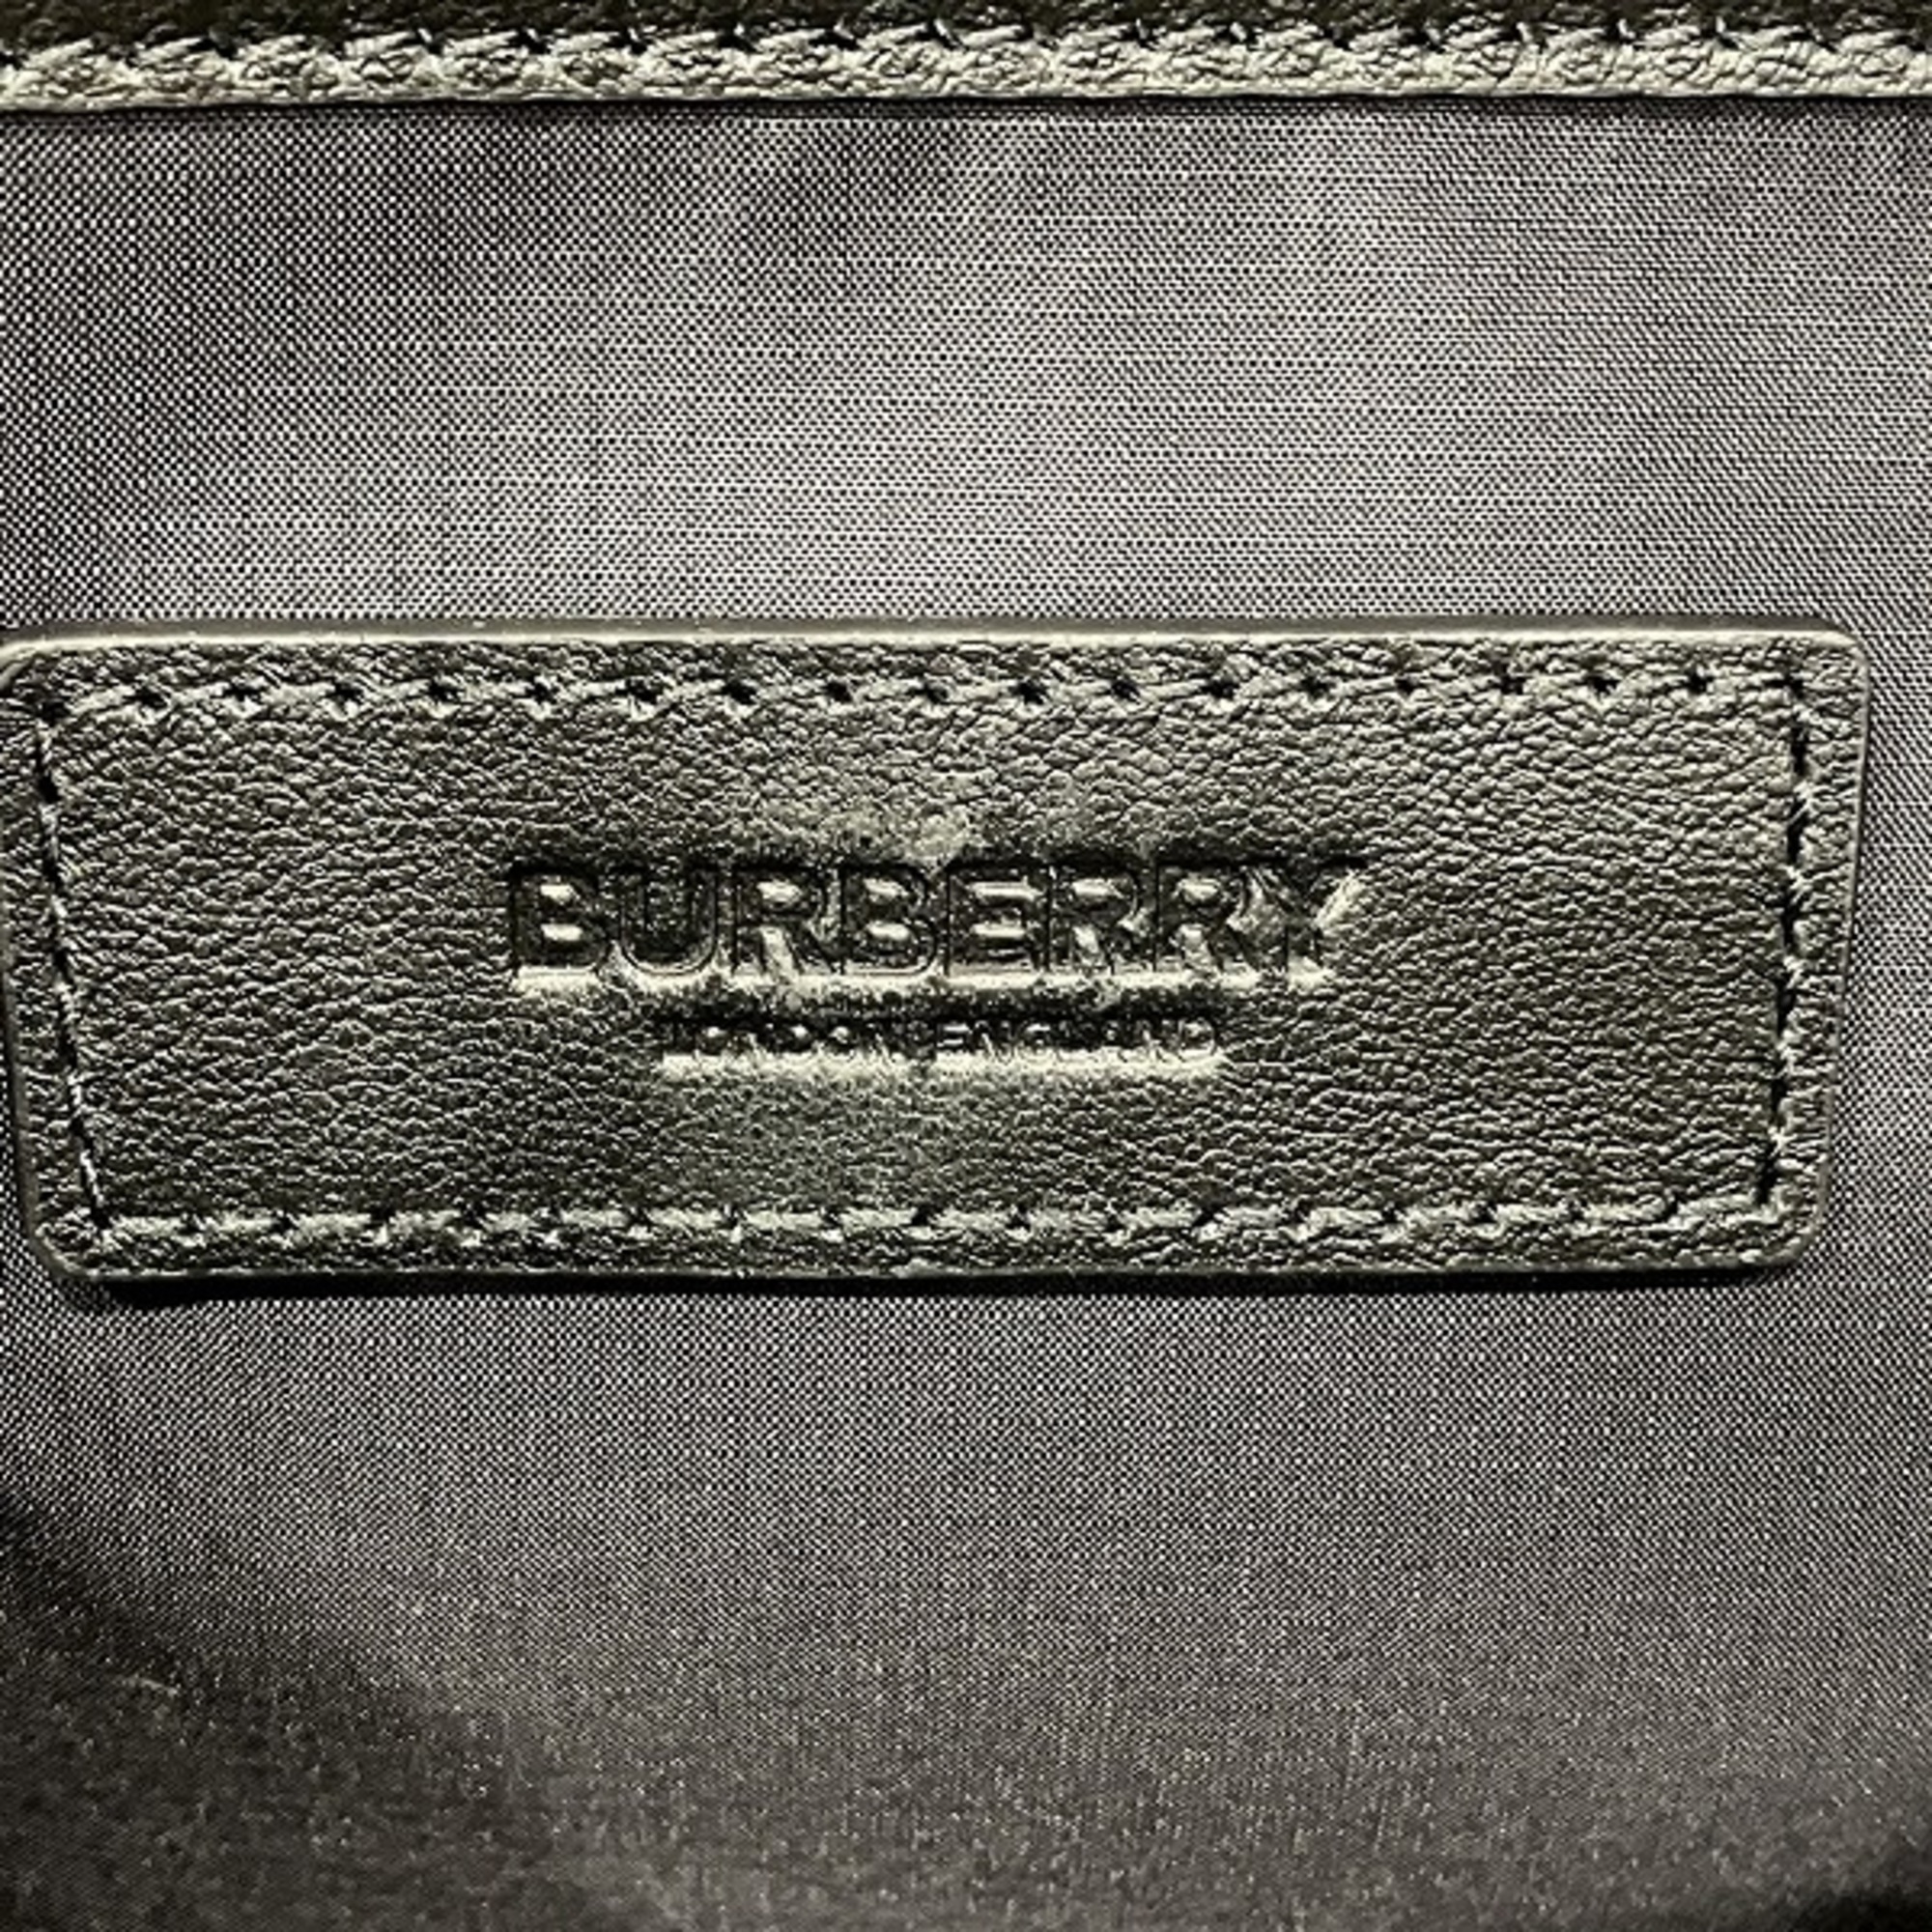 Burberry A:ML KIERAN PN9 Shoulder Bag 8054747 Messenger Men's Women's